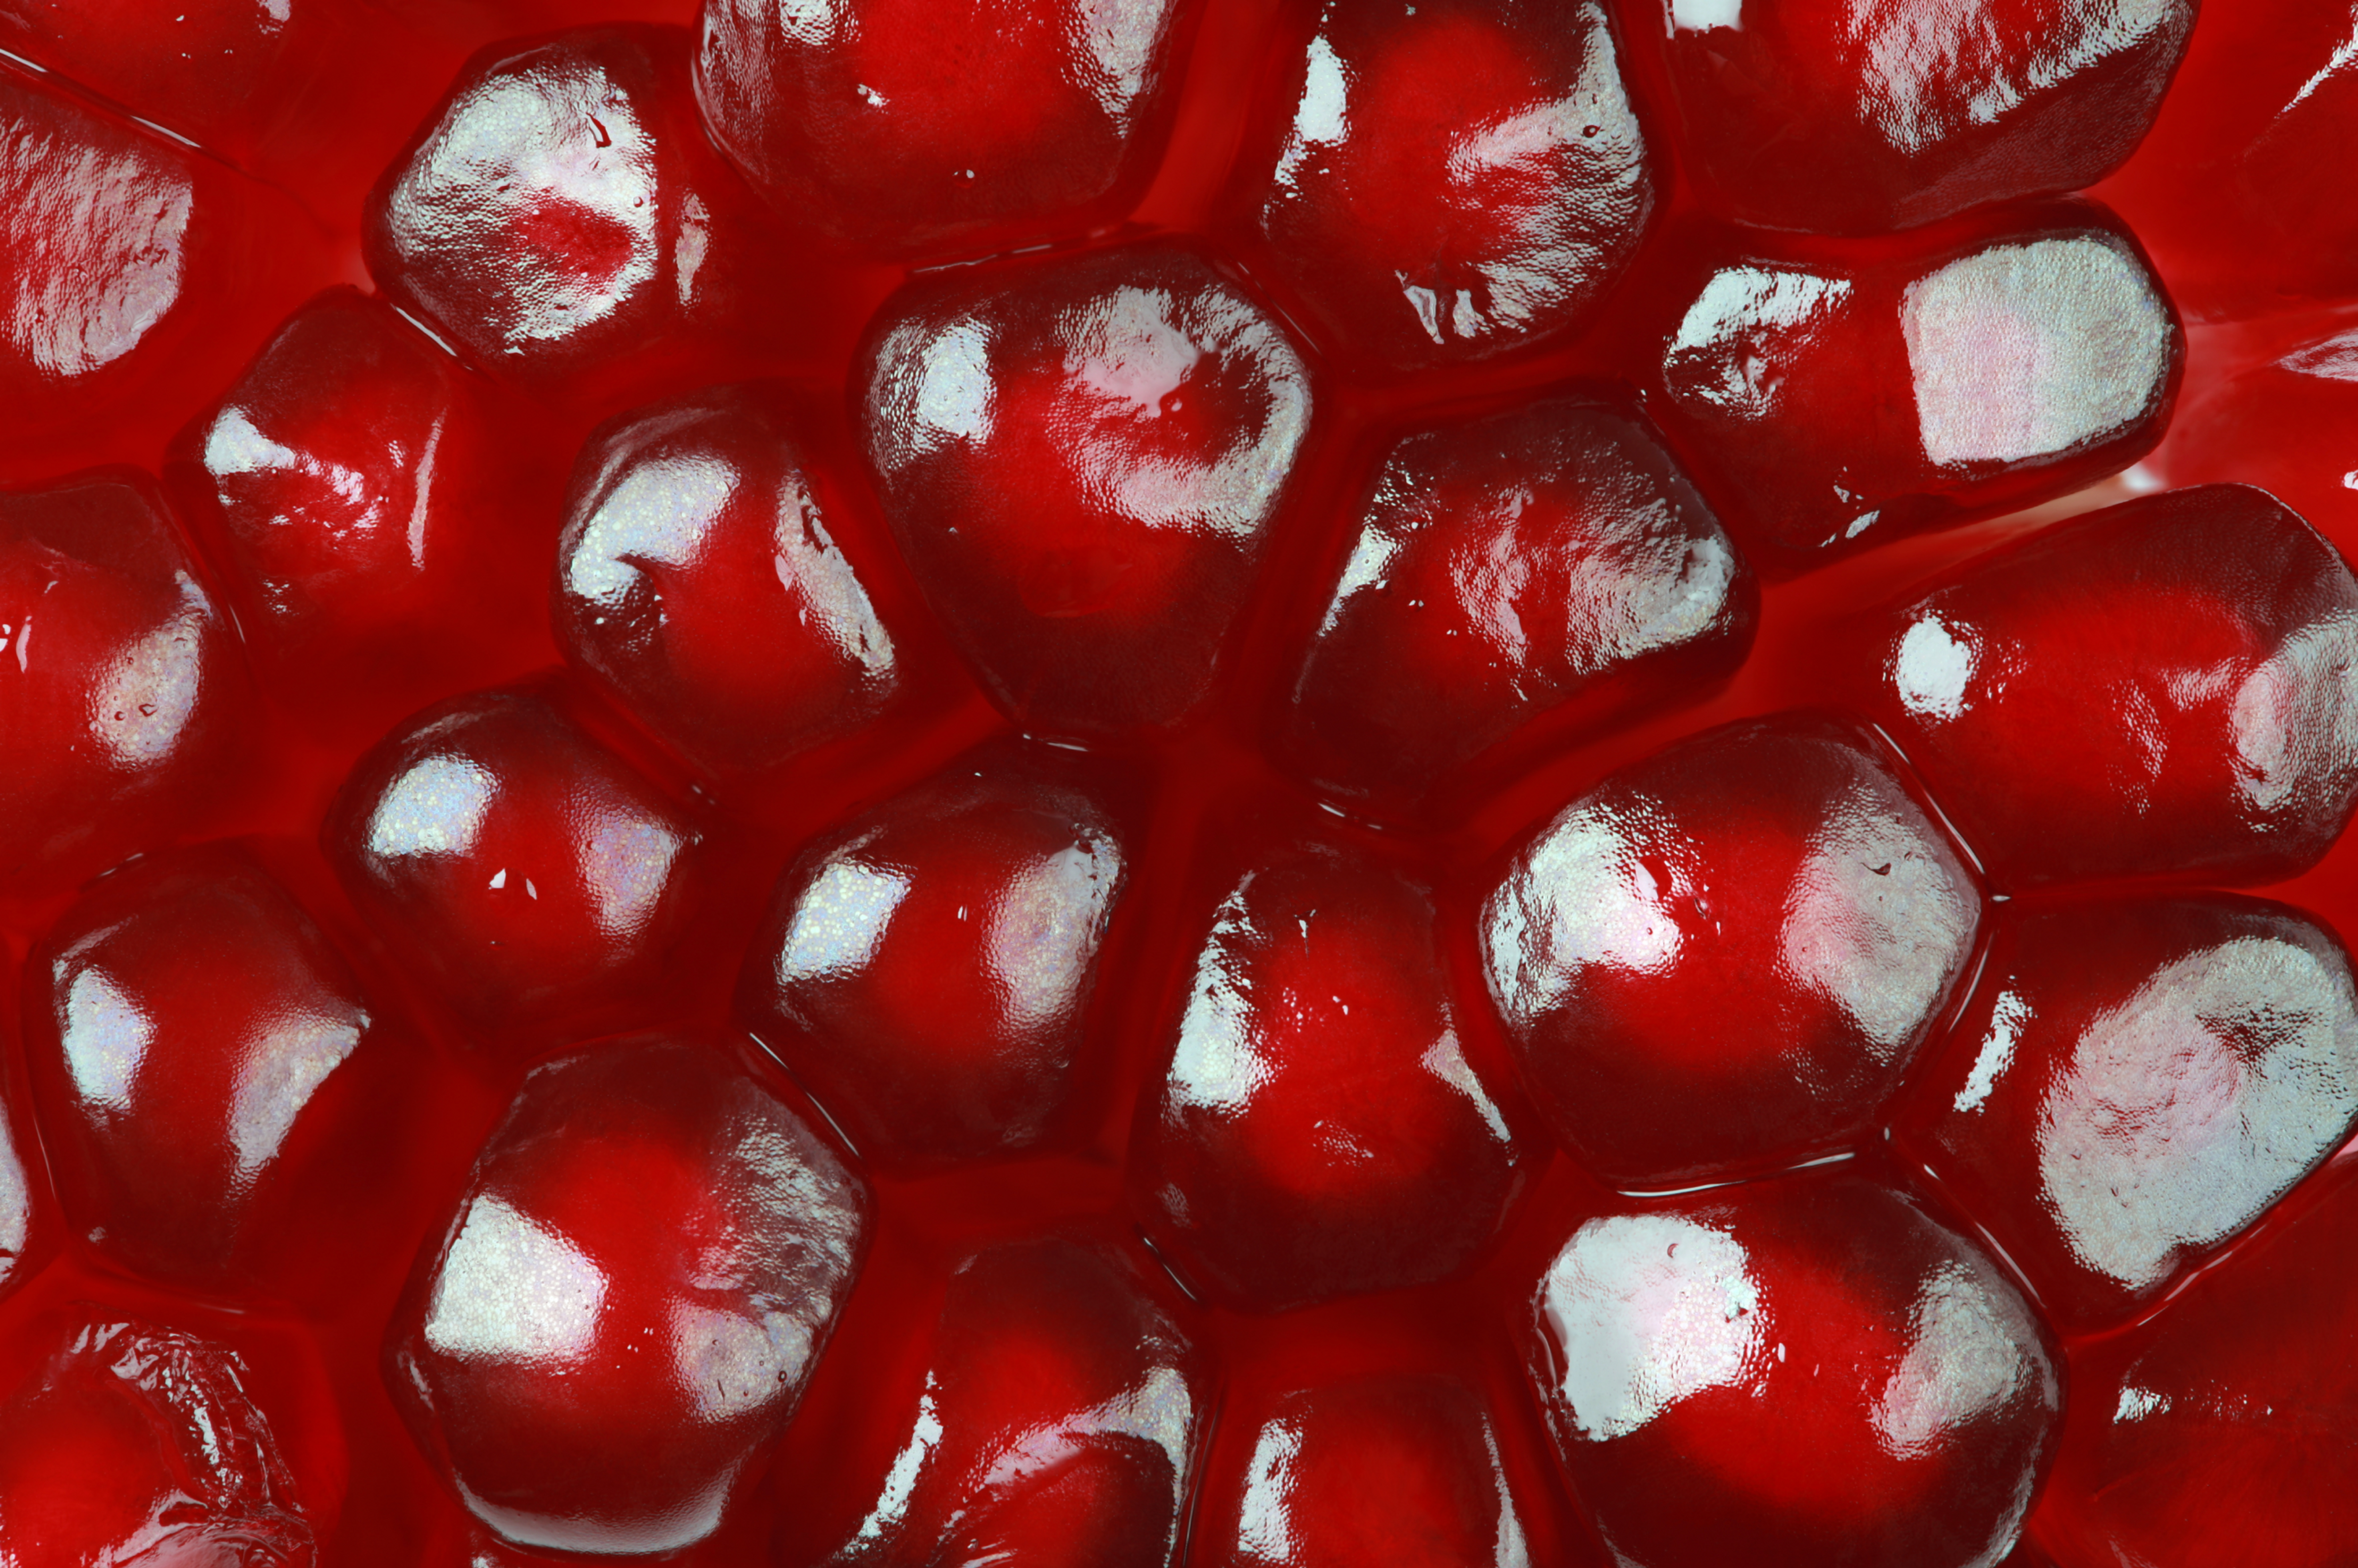 Close-up photo of pomegranate kernels